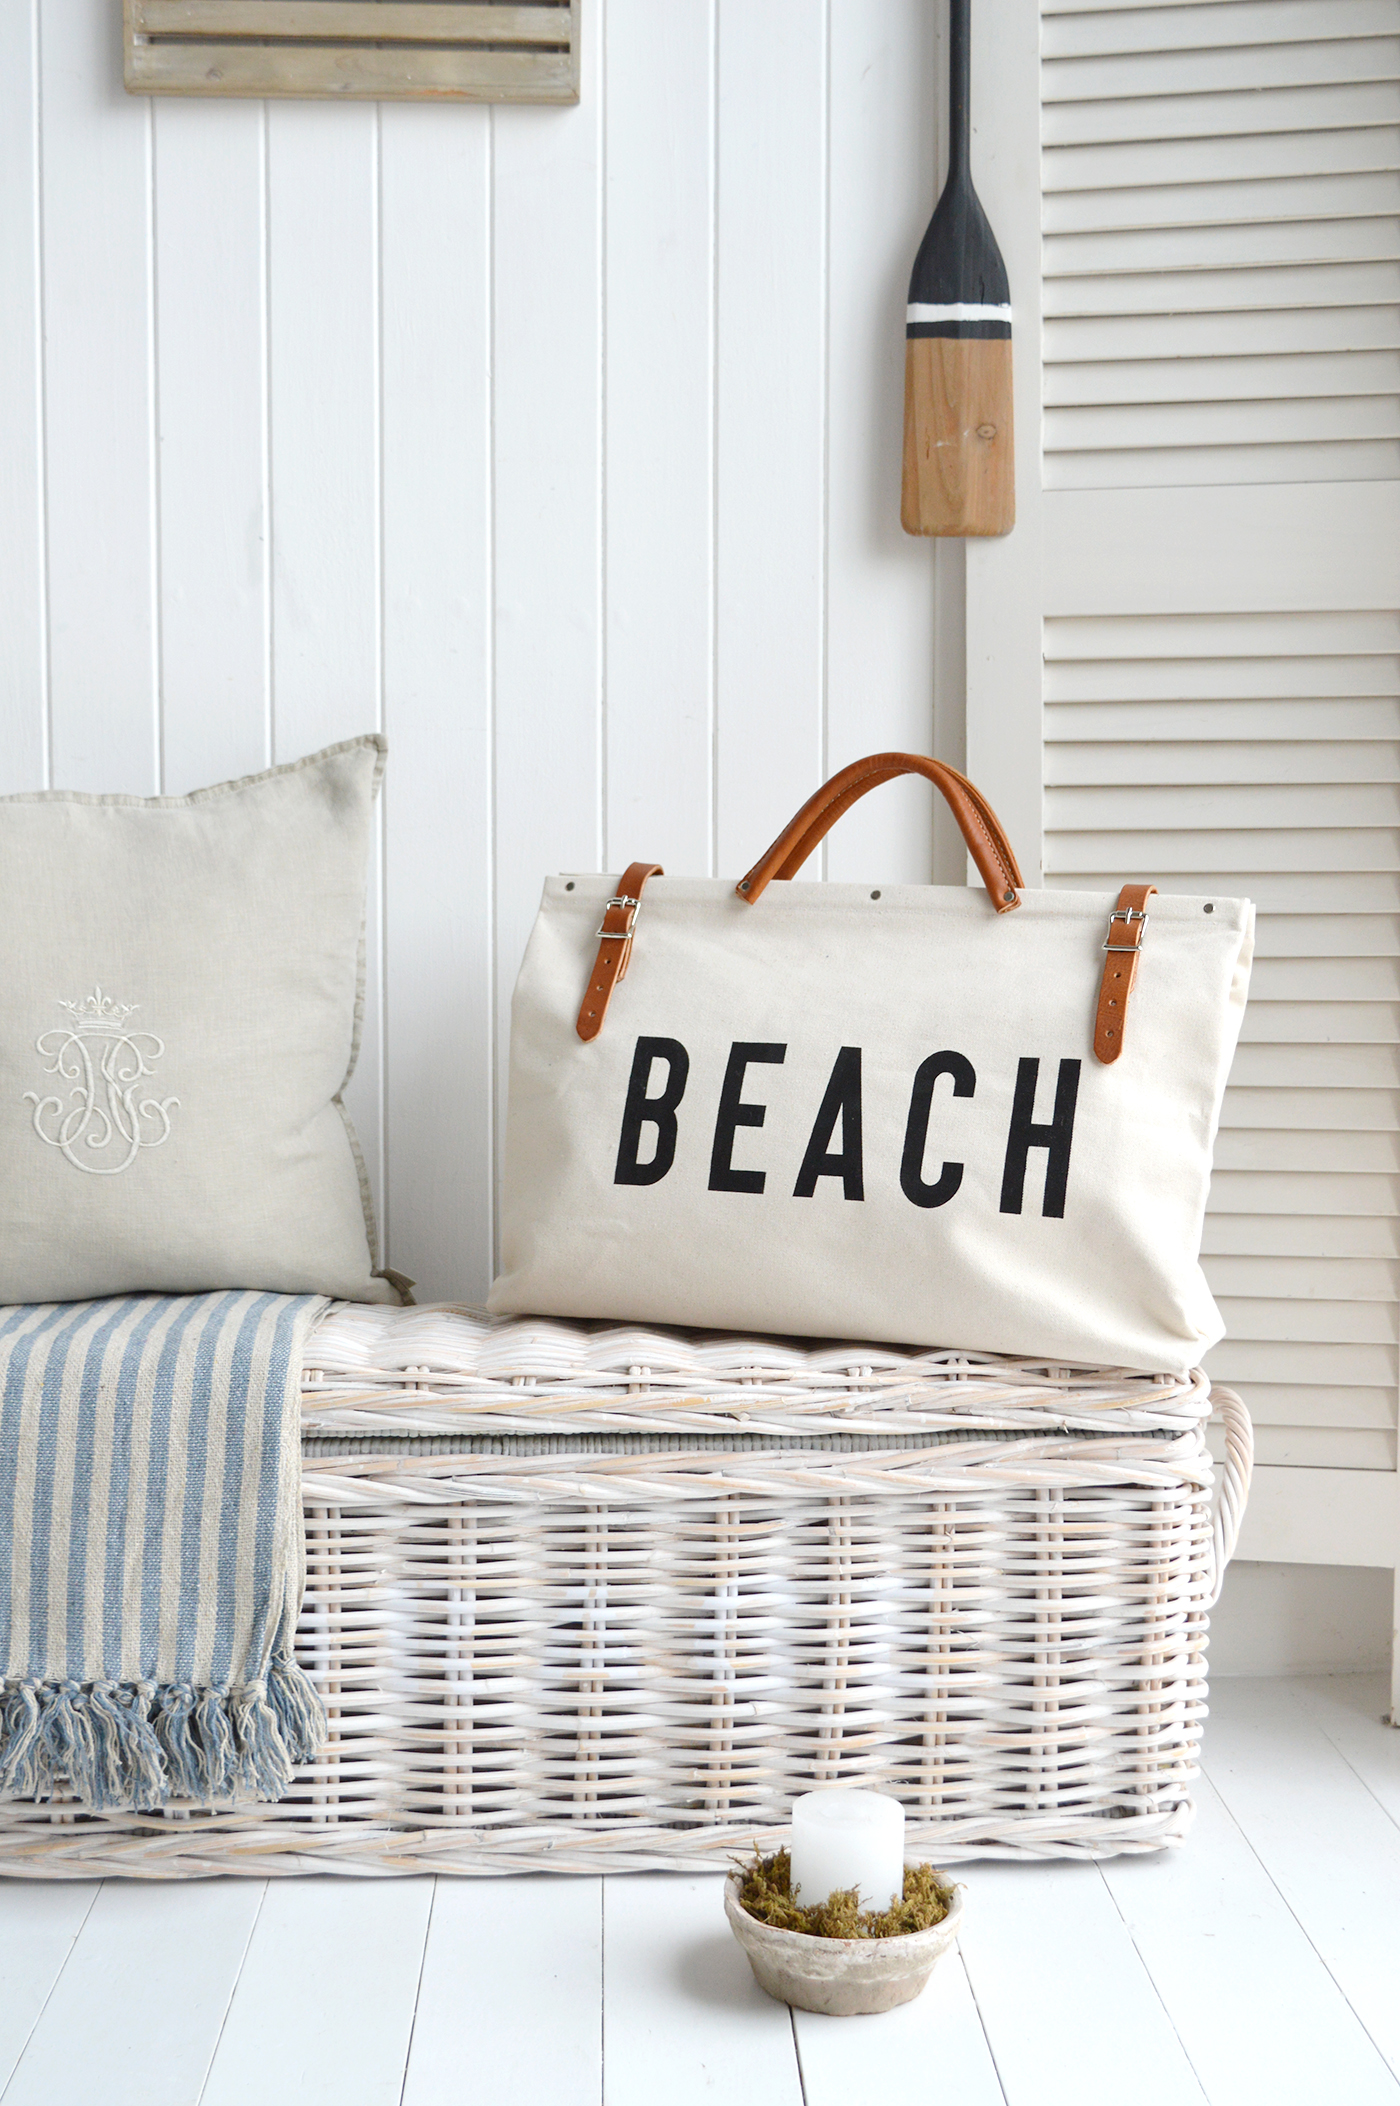 Beach canvas utiliy bag for styleing a coastal beach house interior typical of New England